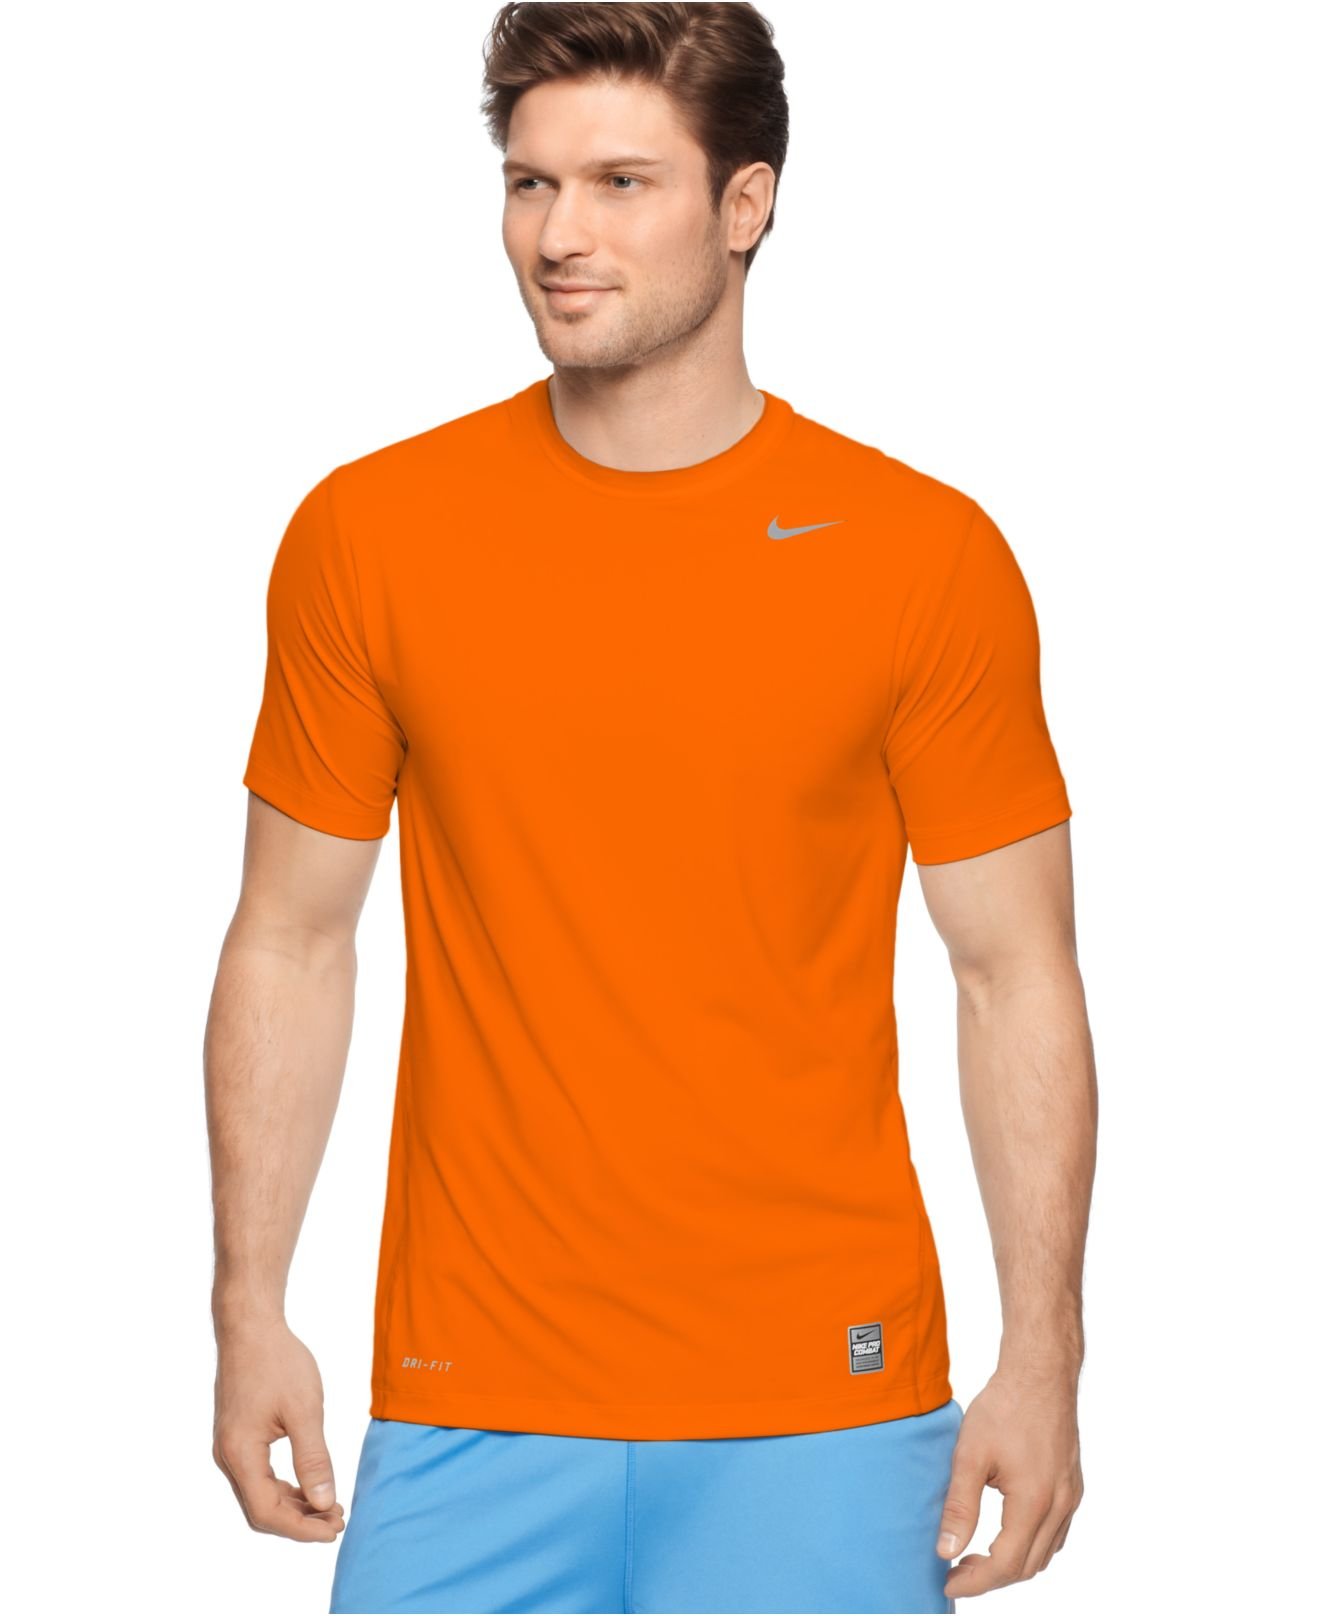 Lyst - Nike Pro Combat Dri-fit T-shirts in Orange for Men